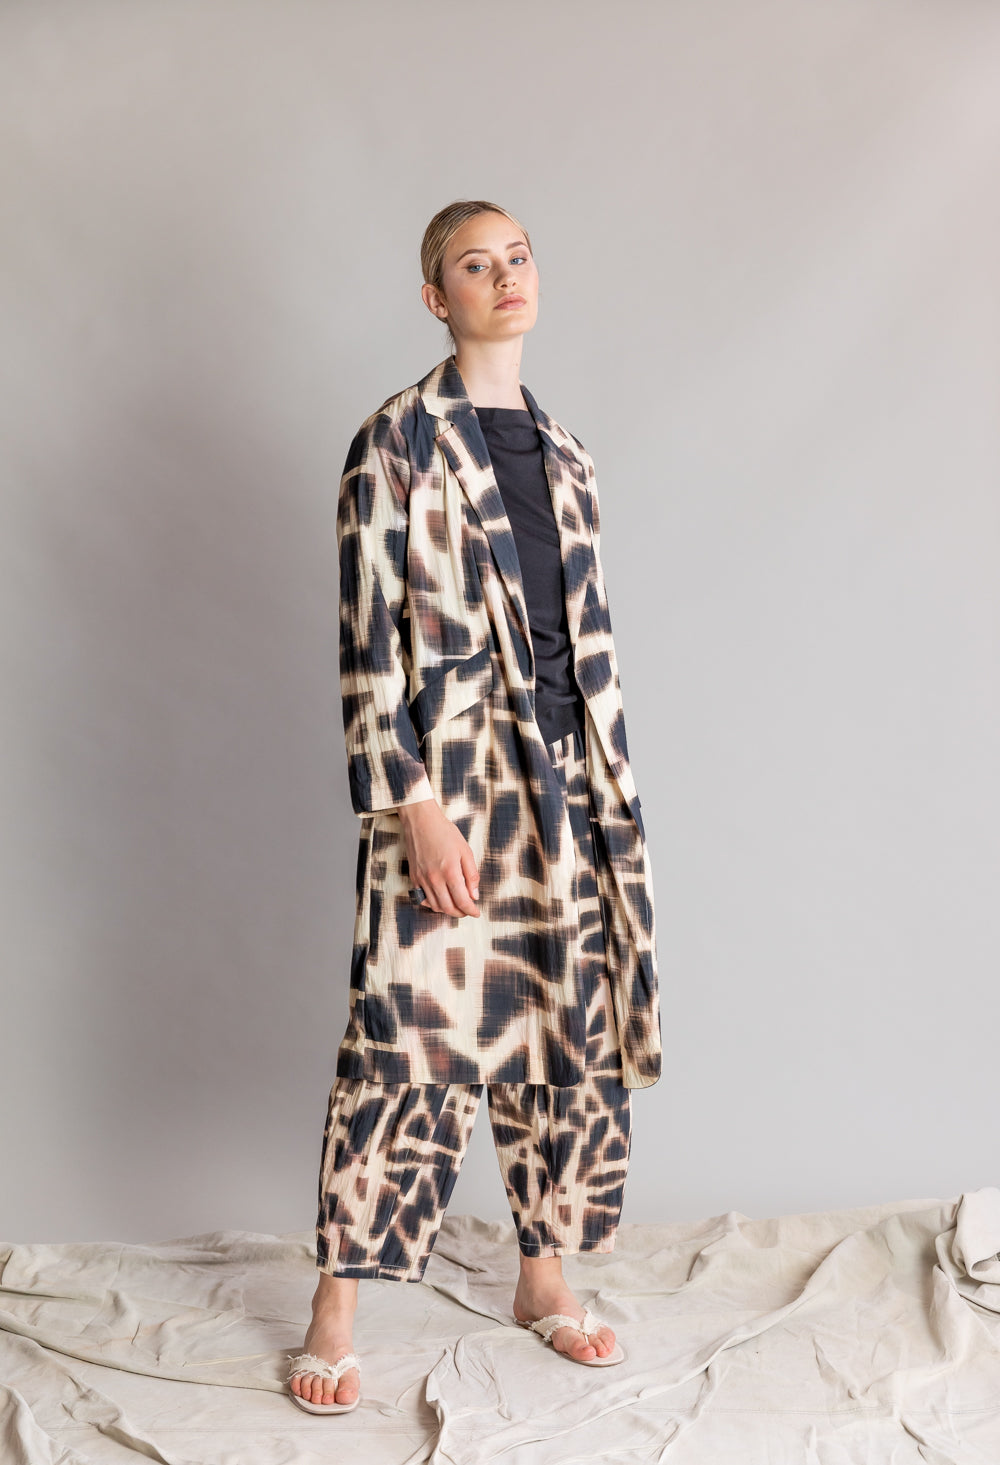 Giraffe frock coat